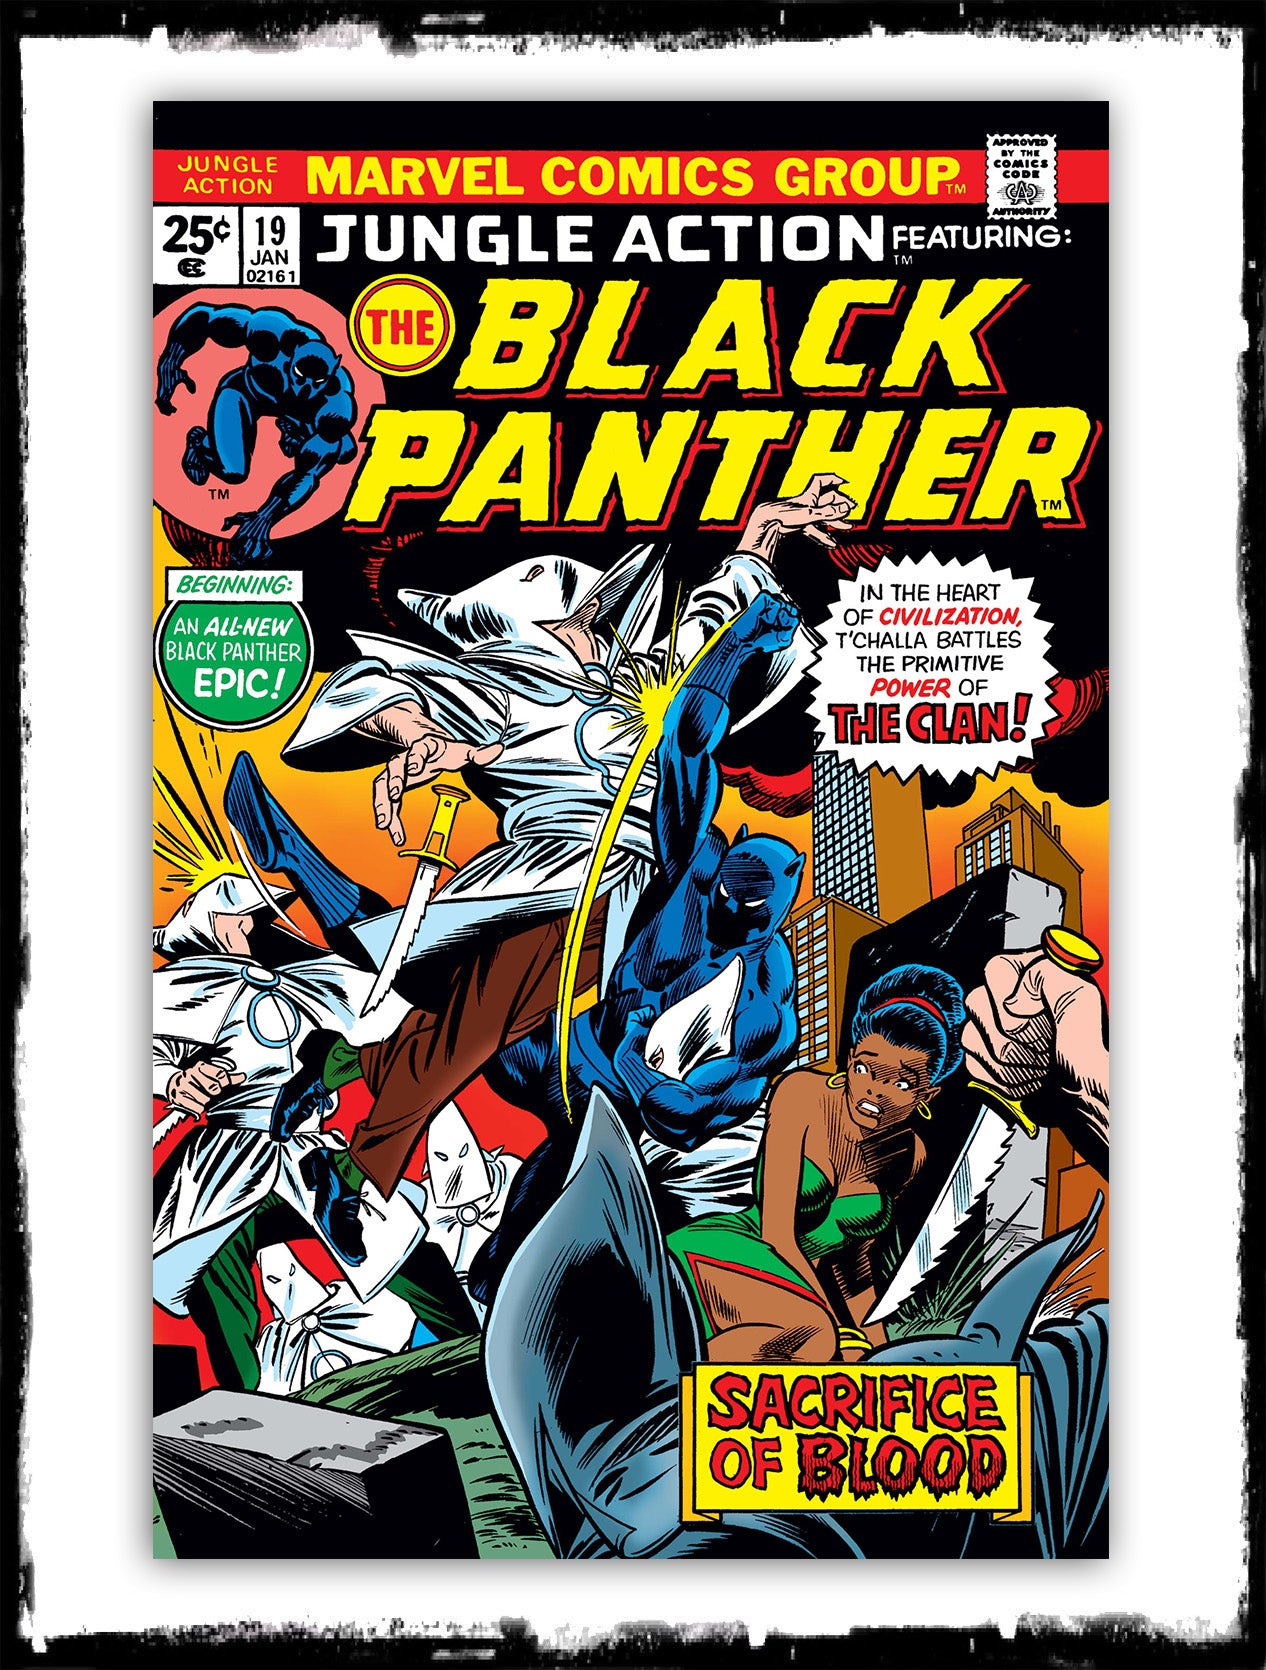 JUNGLE ACTION: FEAT BLACK PANTHER - #19 BLACK PANTHER VS THE KLAN! (1976 - FN+)